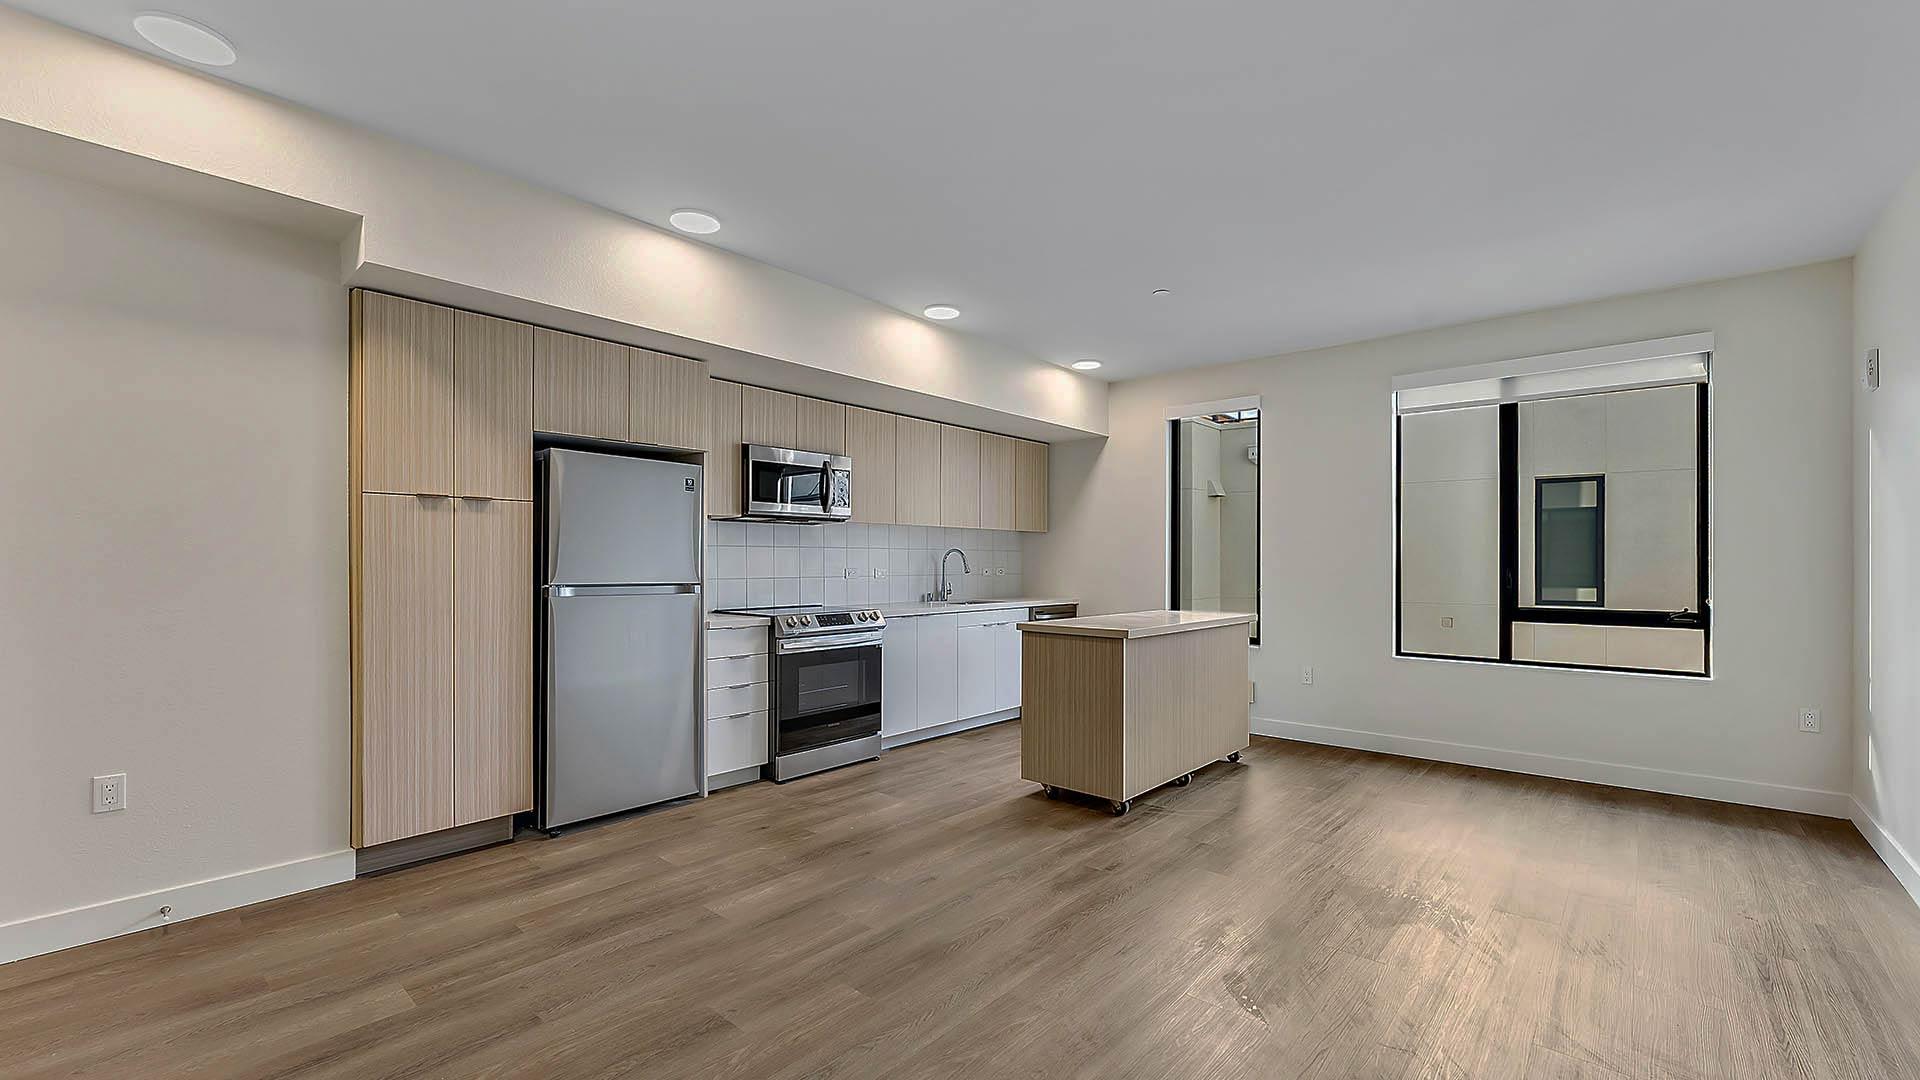 Blake apartments c2 floorplan kitchen view 1